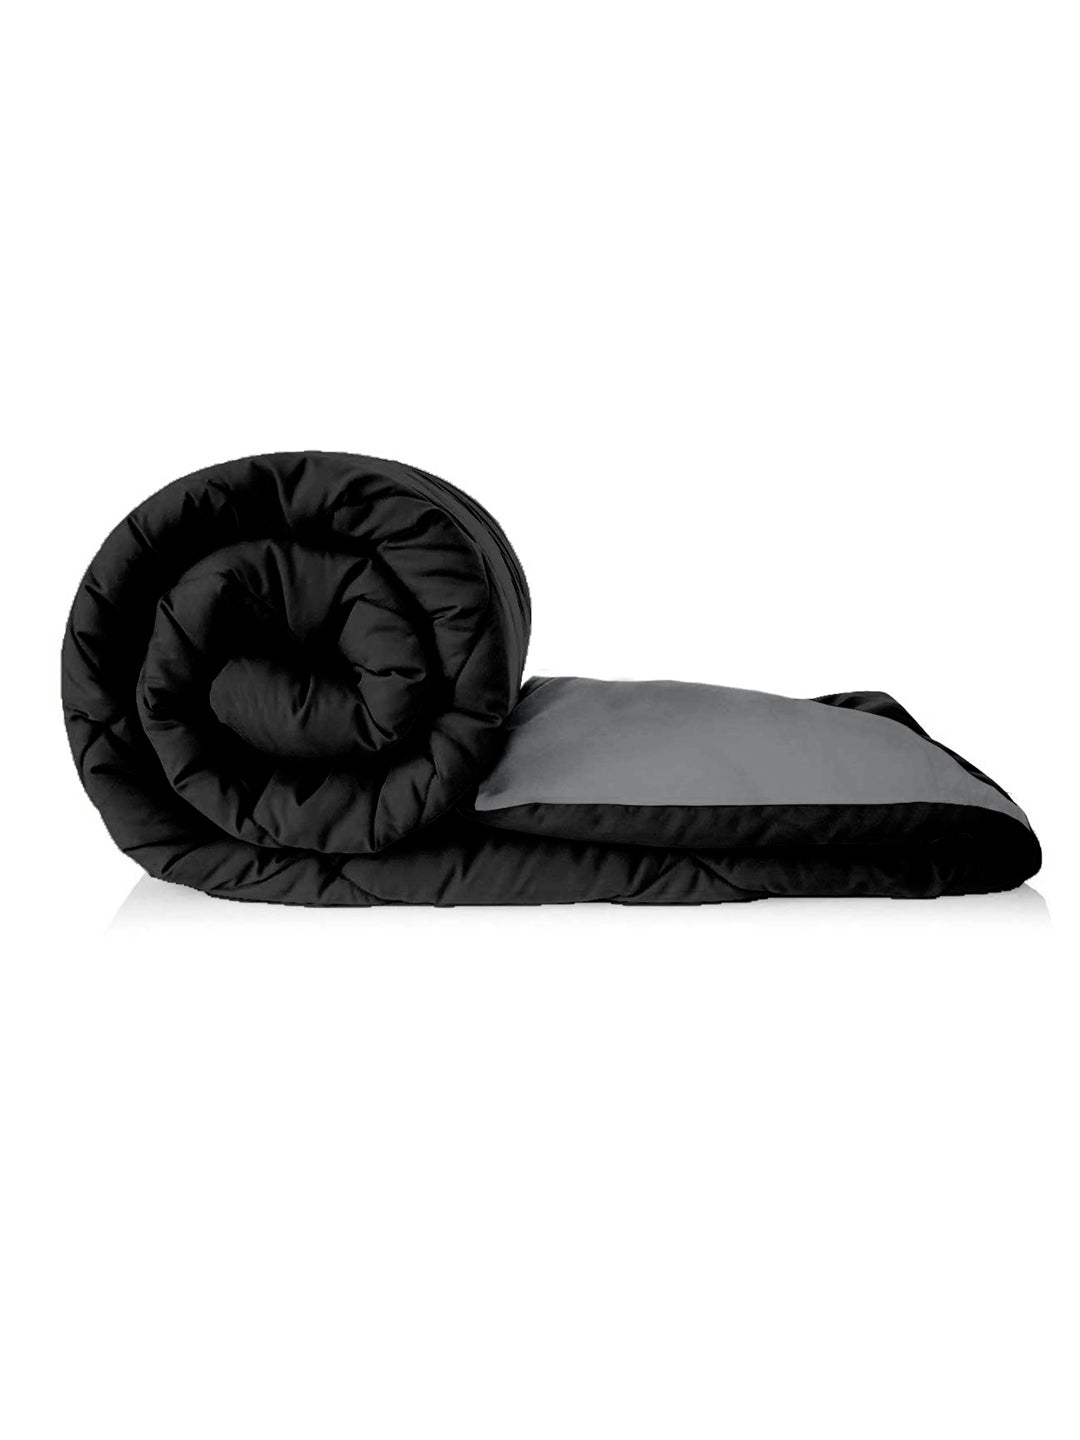 Black & Grey Microfiber Double comforter for Mild Winter